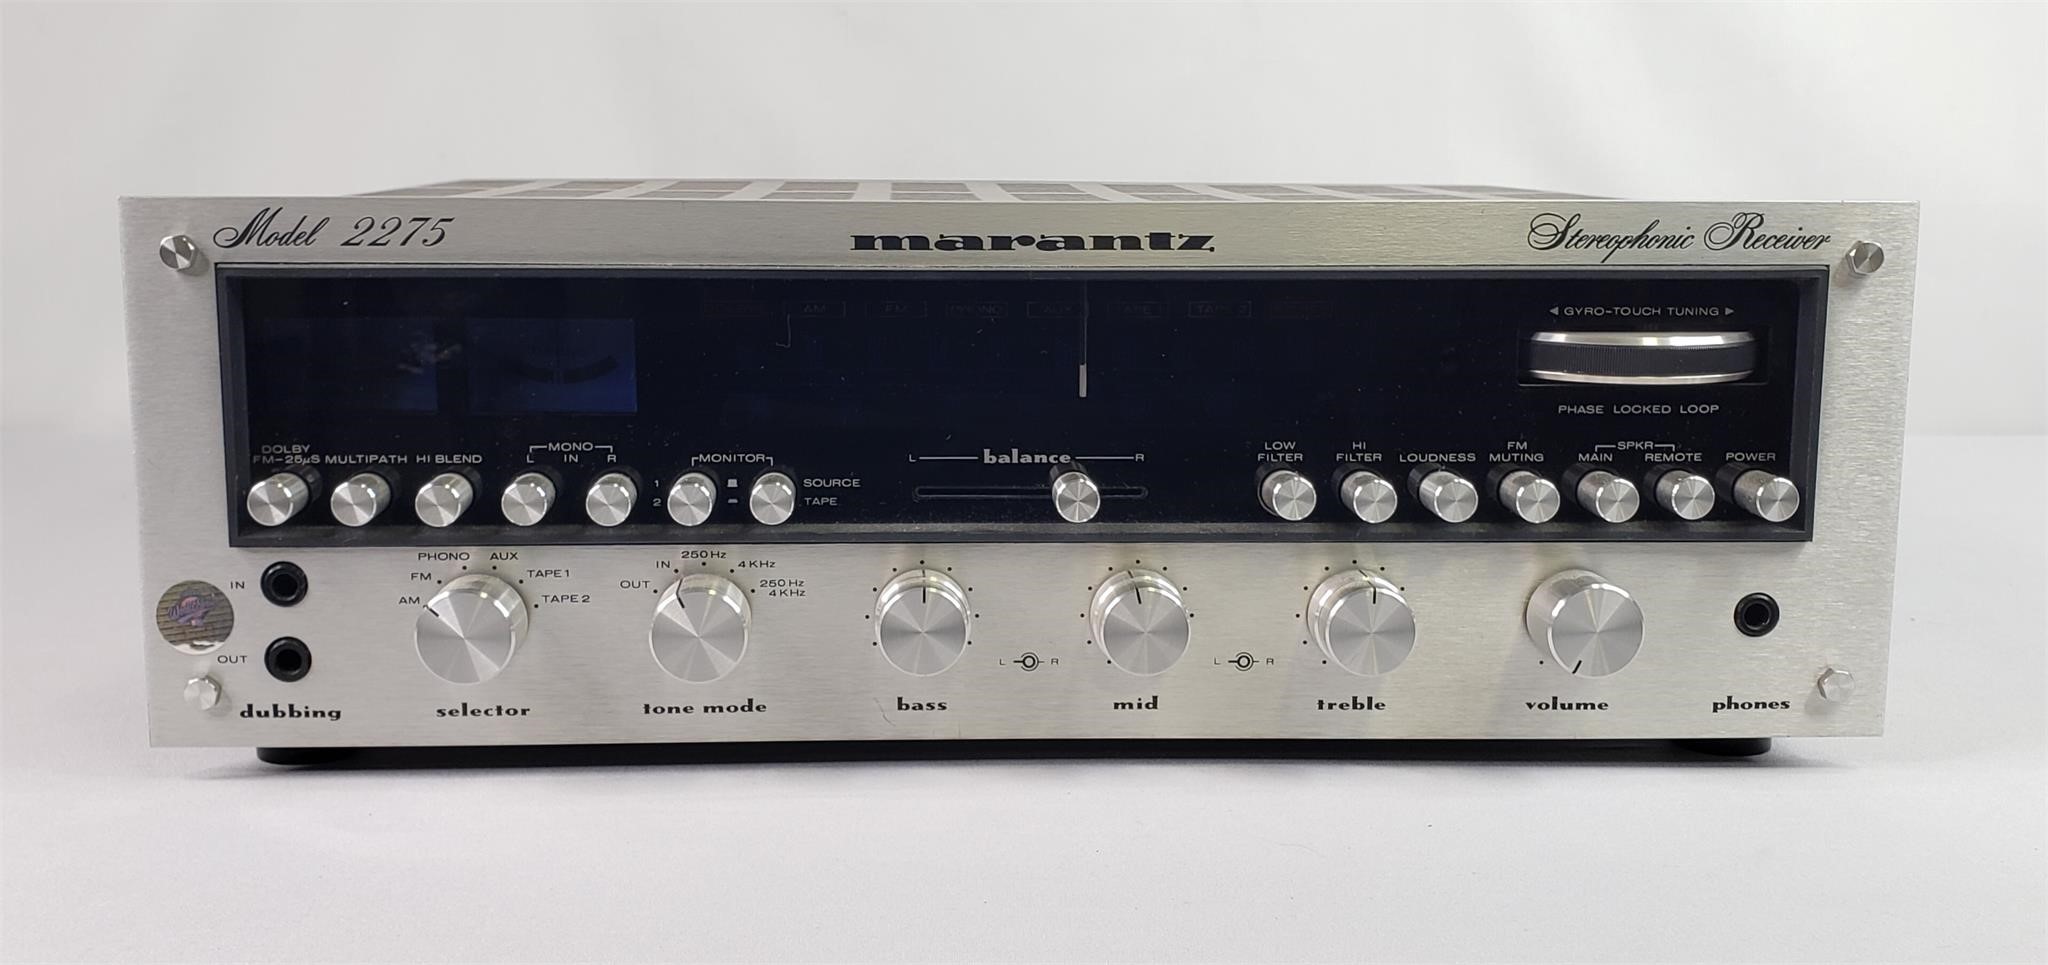 Marantz Stereophonic Receiver Model 2275 w/ Manual